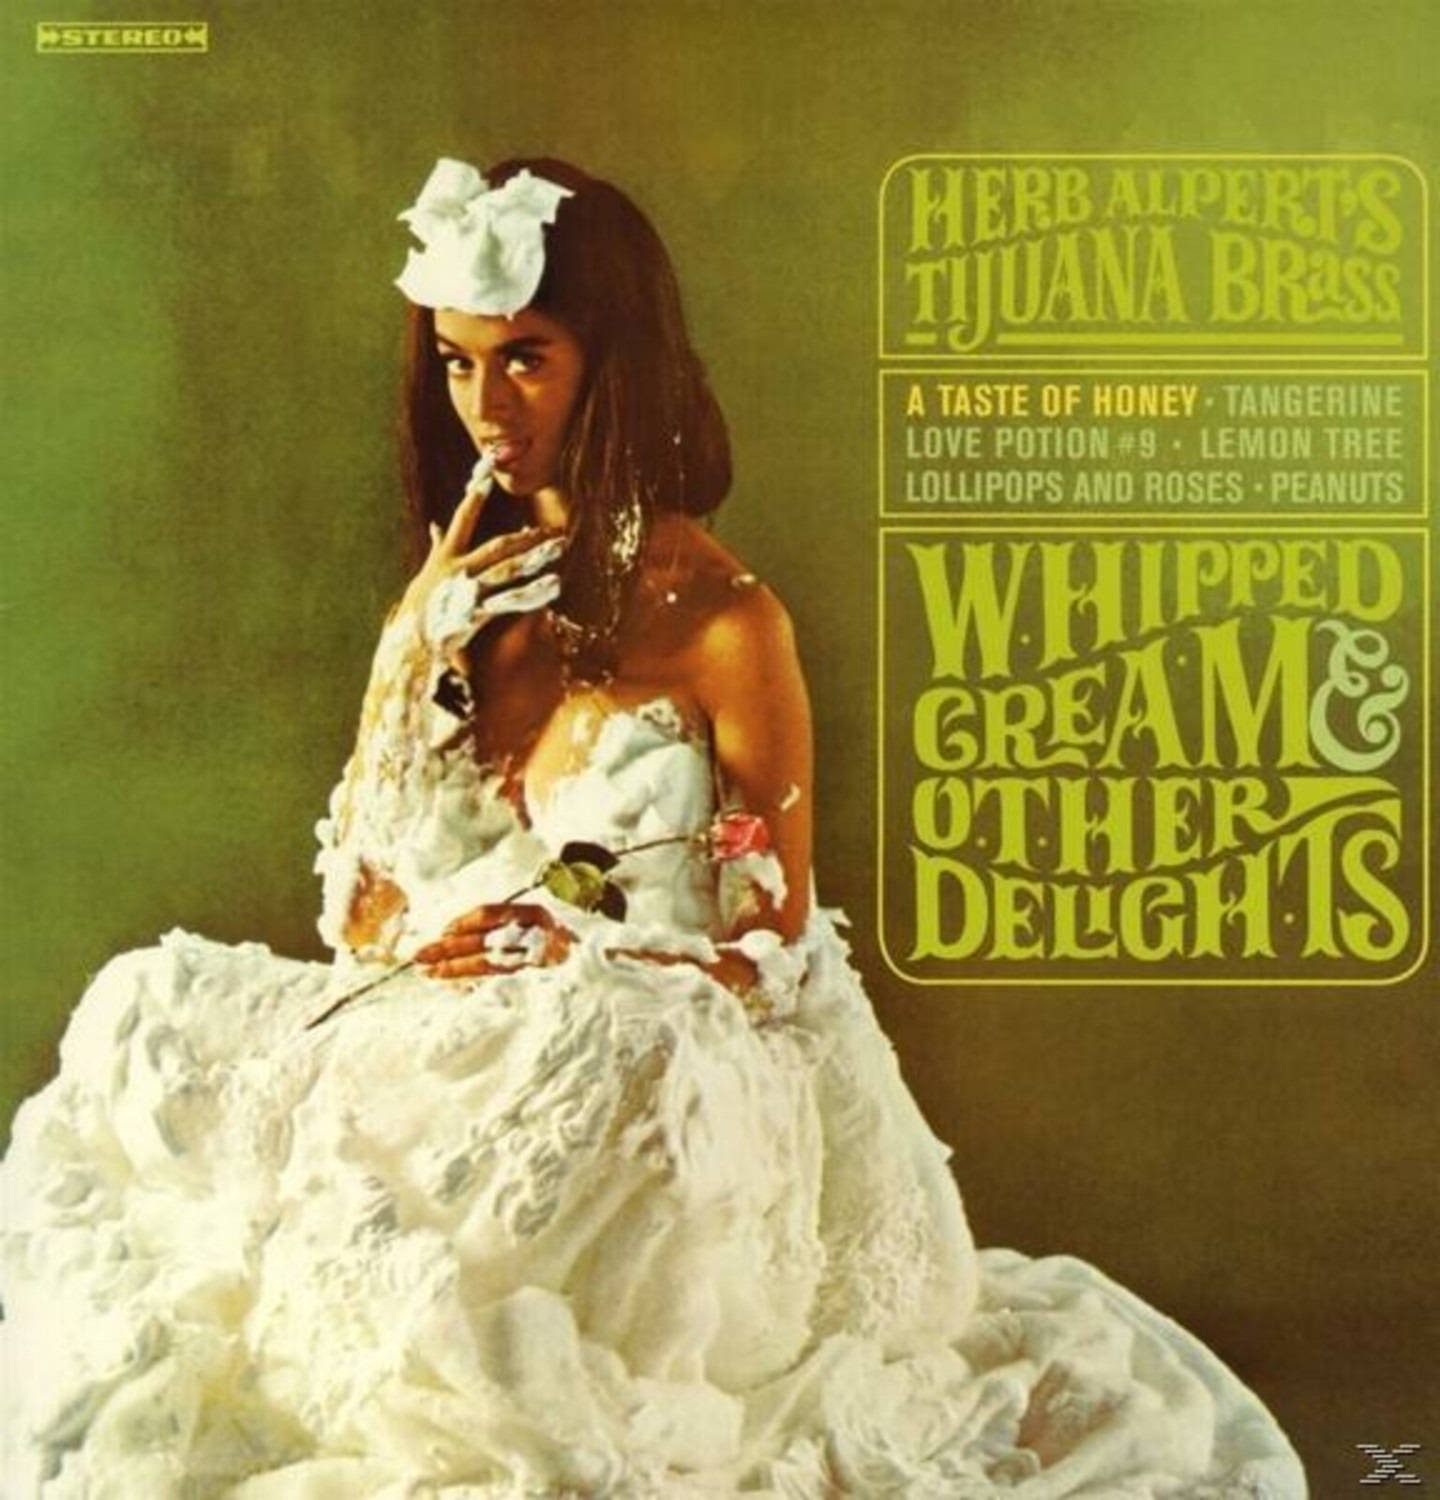 Albumclassico Di Herb Alpert E The Tijuana Brass Sfondo